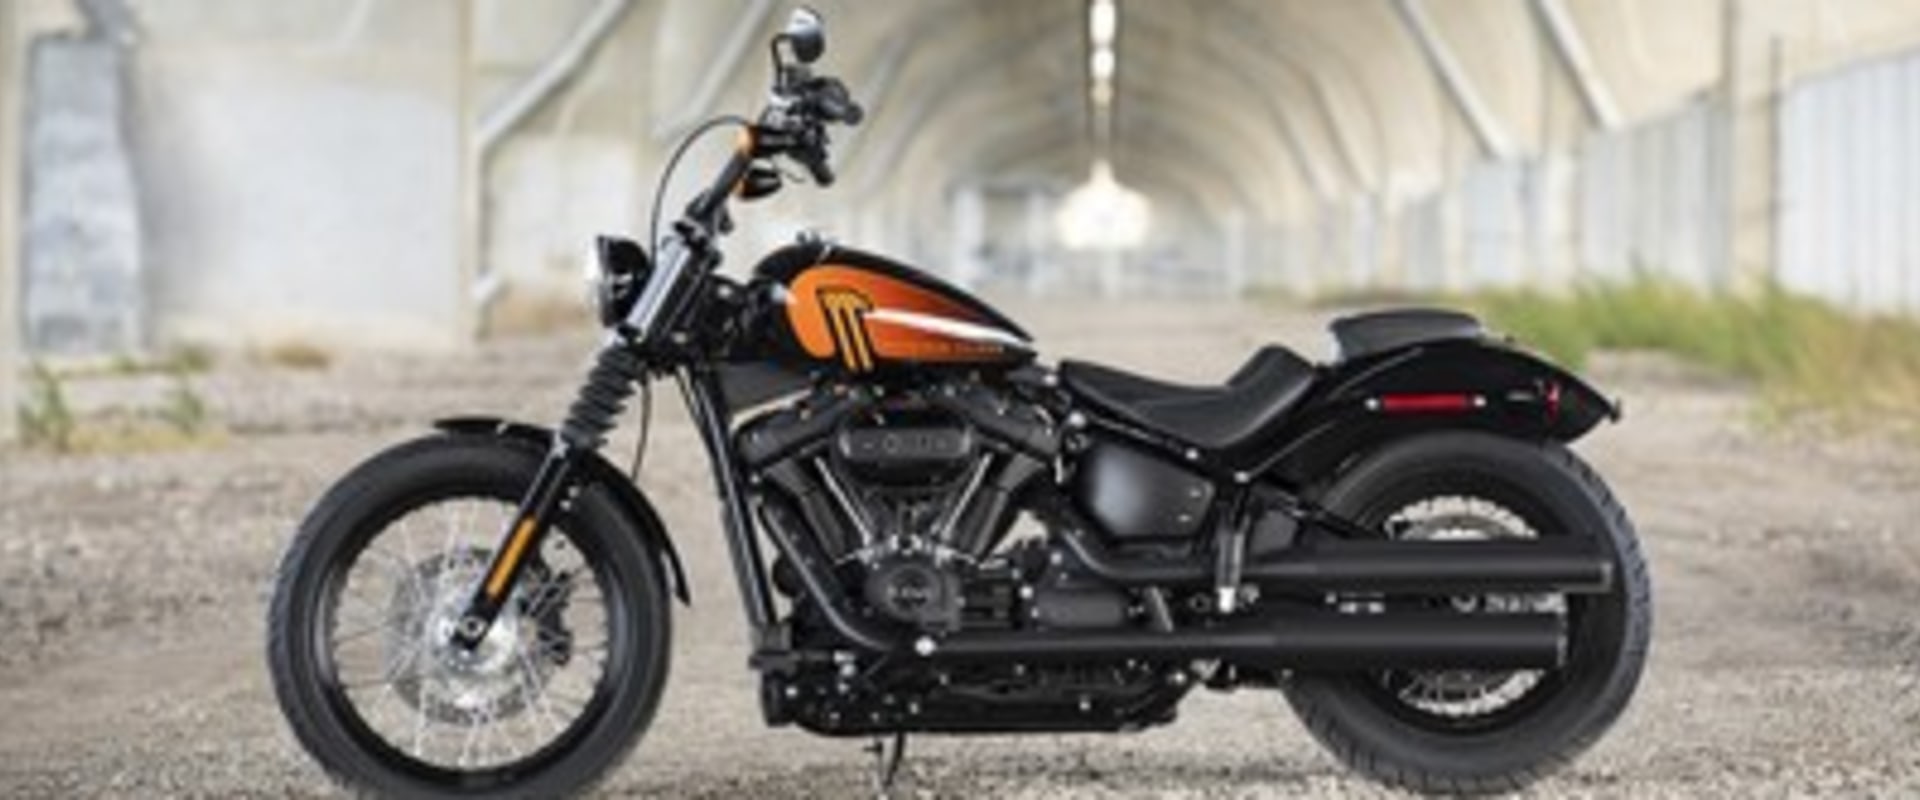 Cheap Harley Davidson Motorcycle Insurance for Senior Citizens